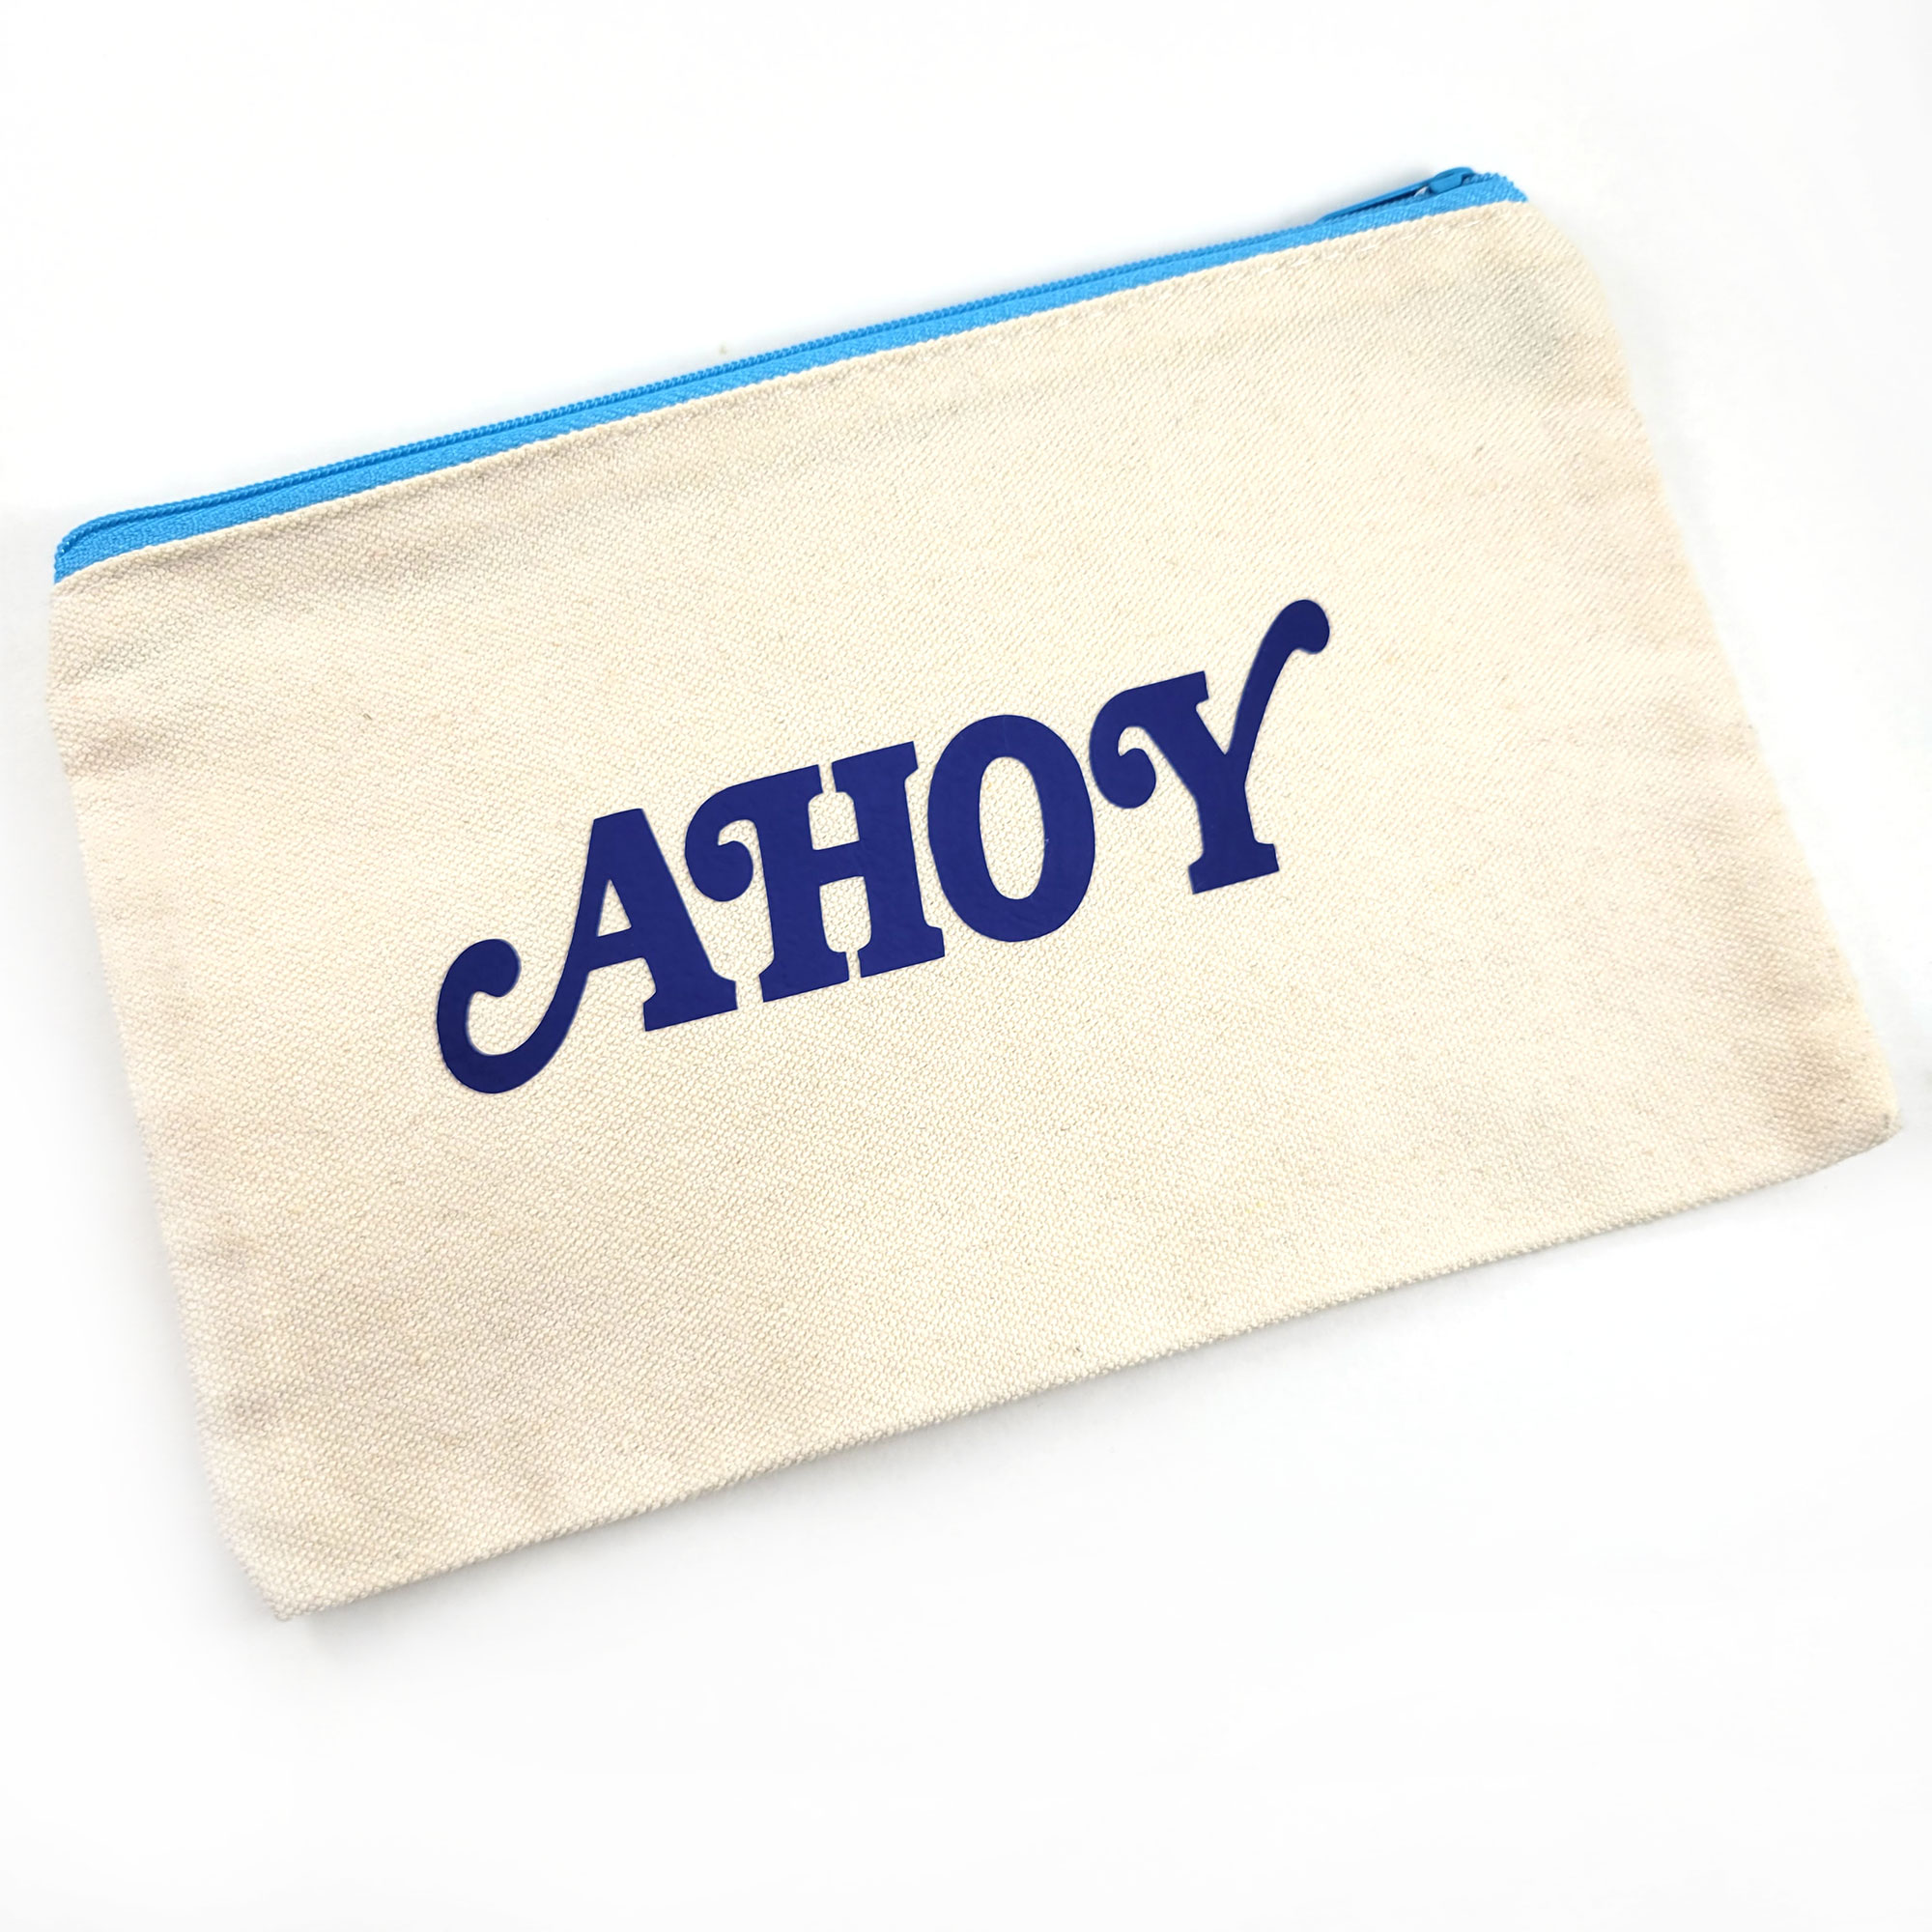 Ahoy Accessory Bag by Wilde Designs